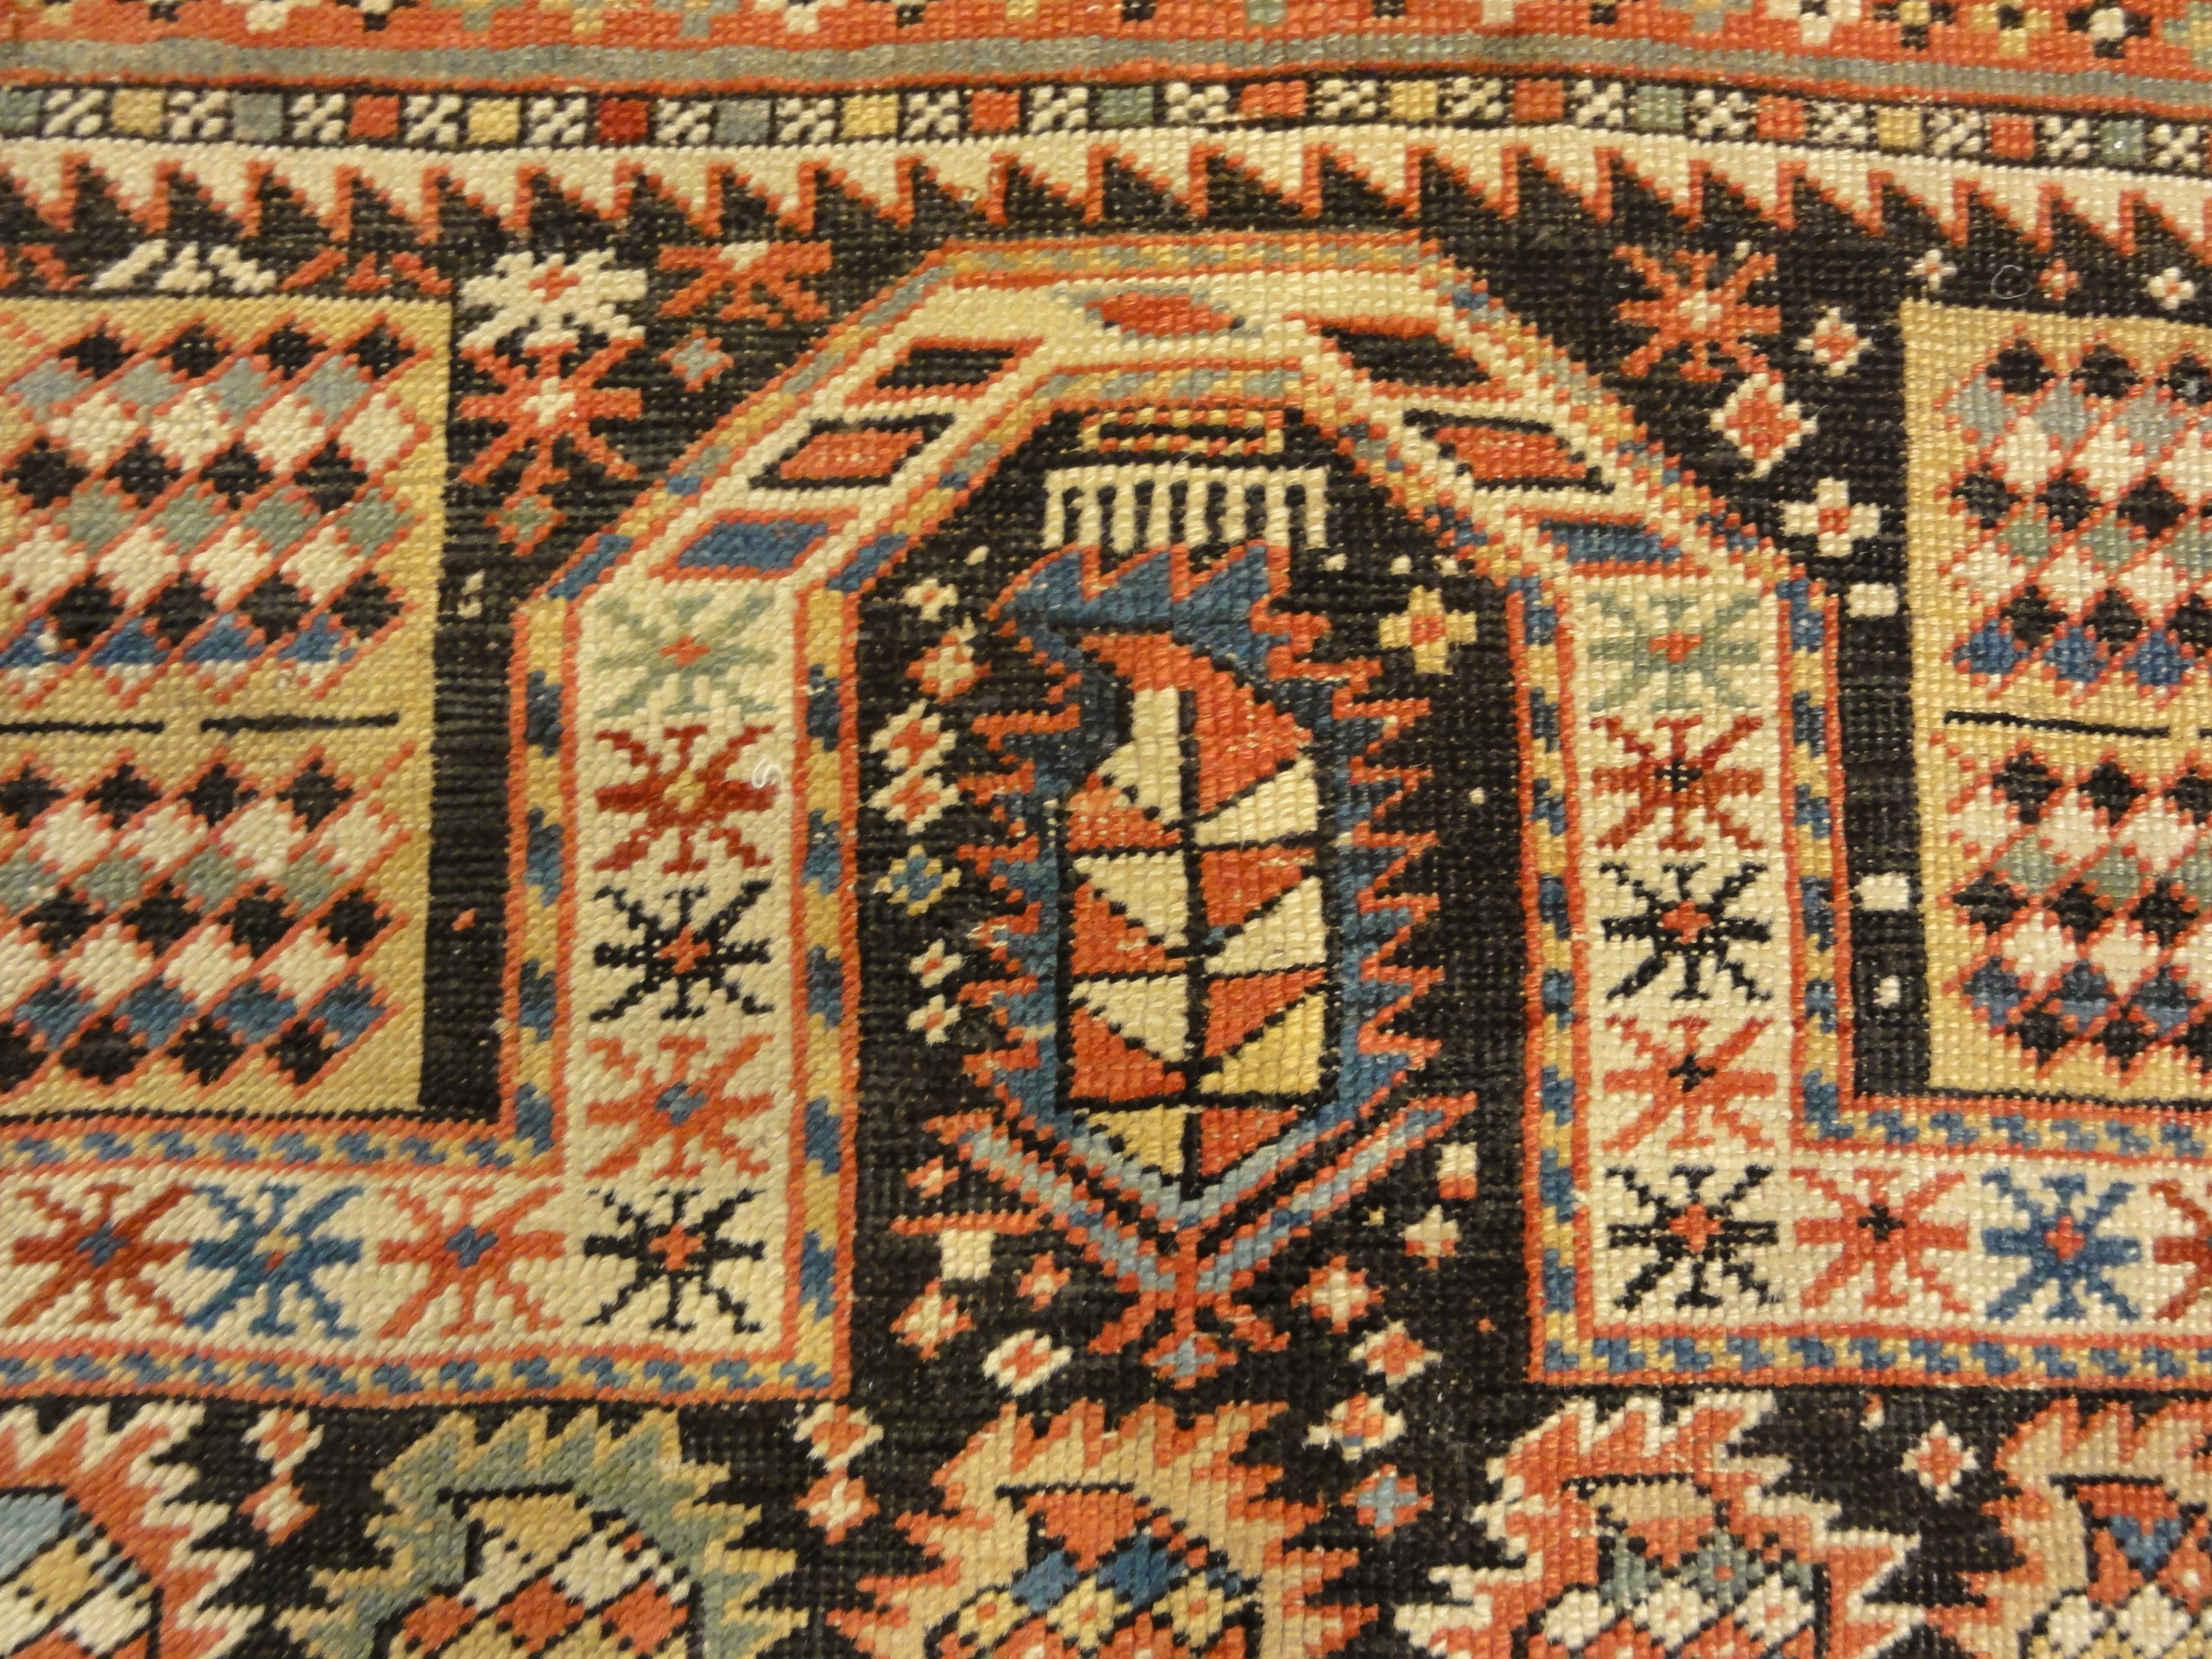 Rarest Antique Maraseli Shirvan Caucasian Prayer Rug. A piece of genuine woven carpet art sold by the Santa Barbara Design Center, Rugs and More.